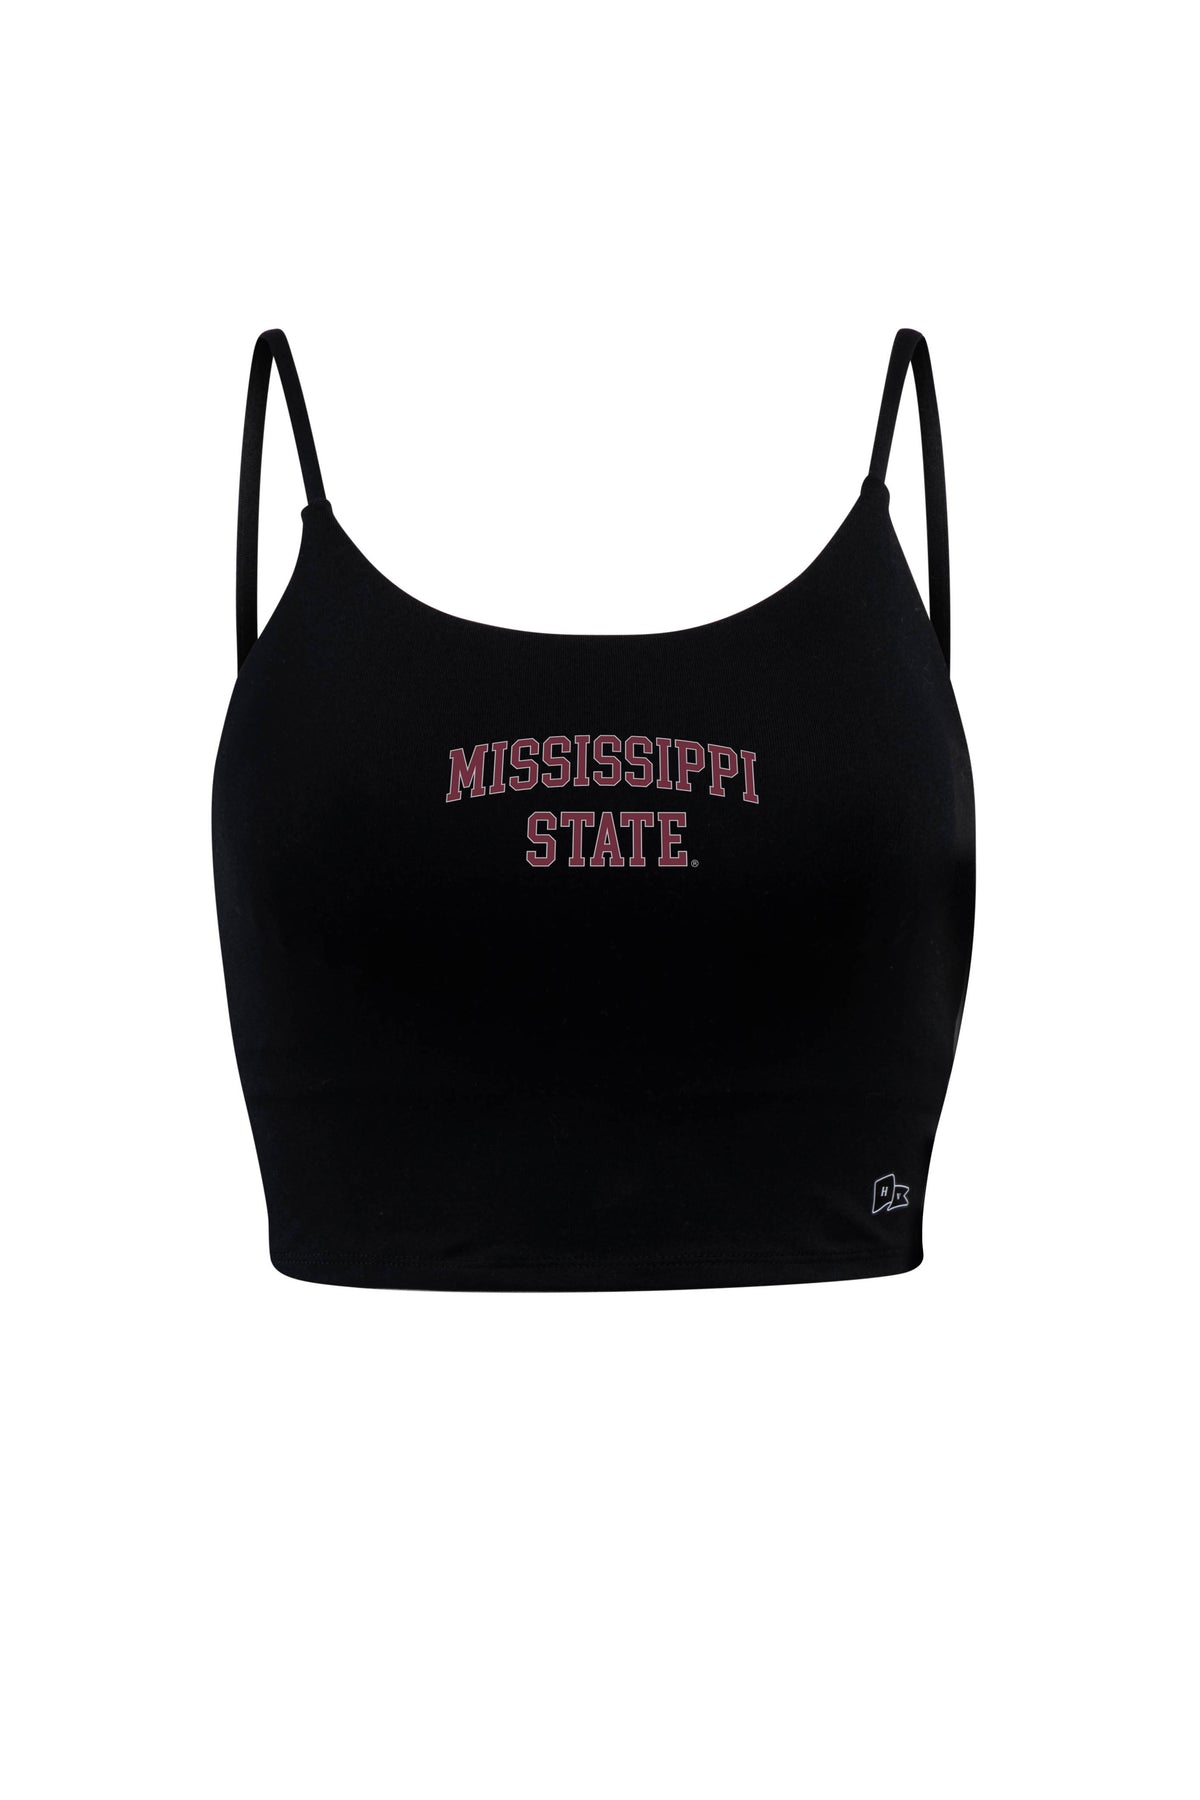 Mississippi State University Bra Tank Top